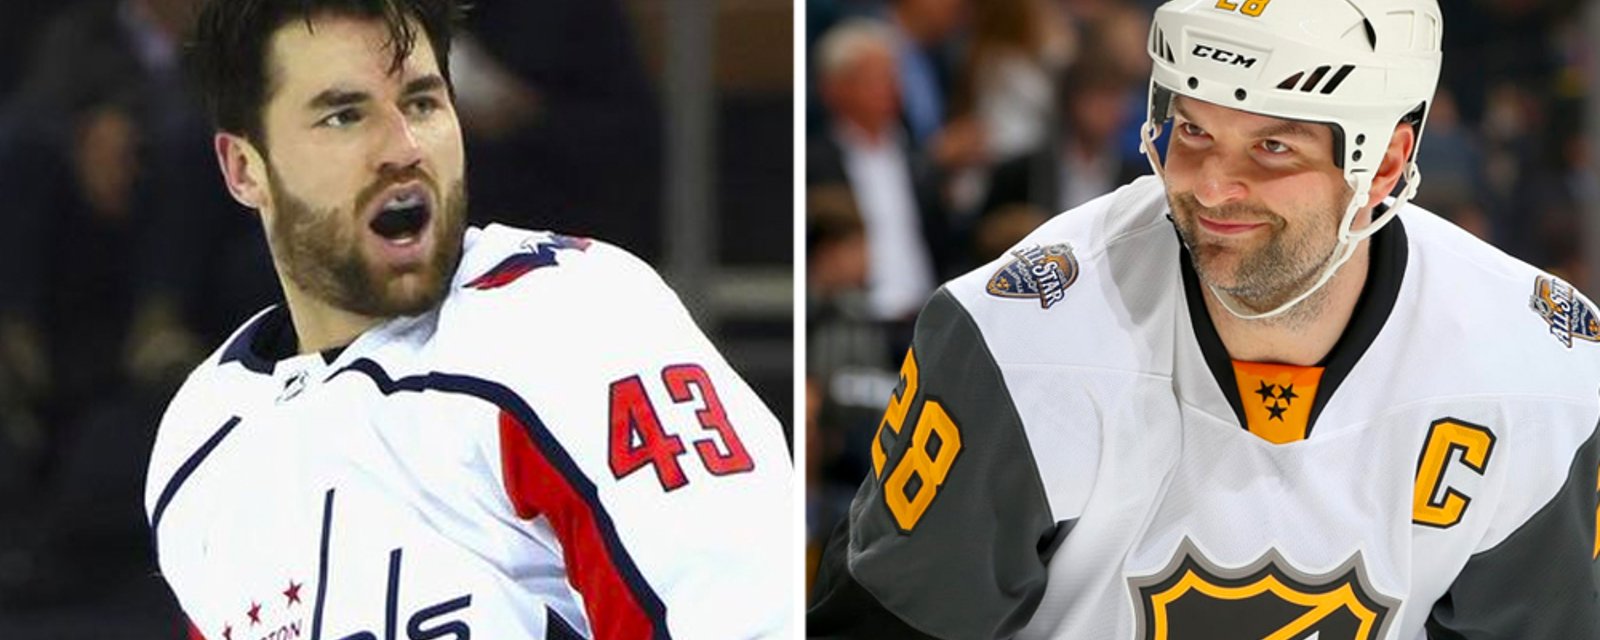 Former NHLer John Scott calls out Tom Wilson, says star players are now “fair game”